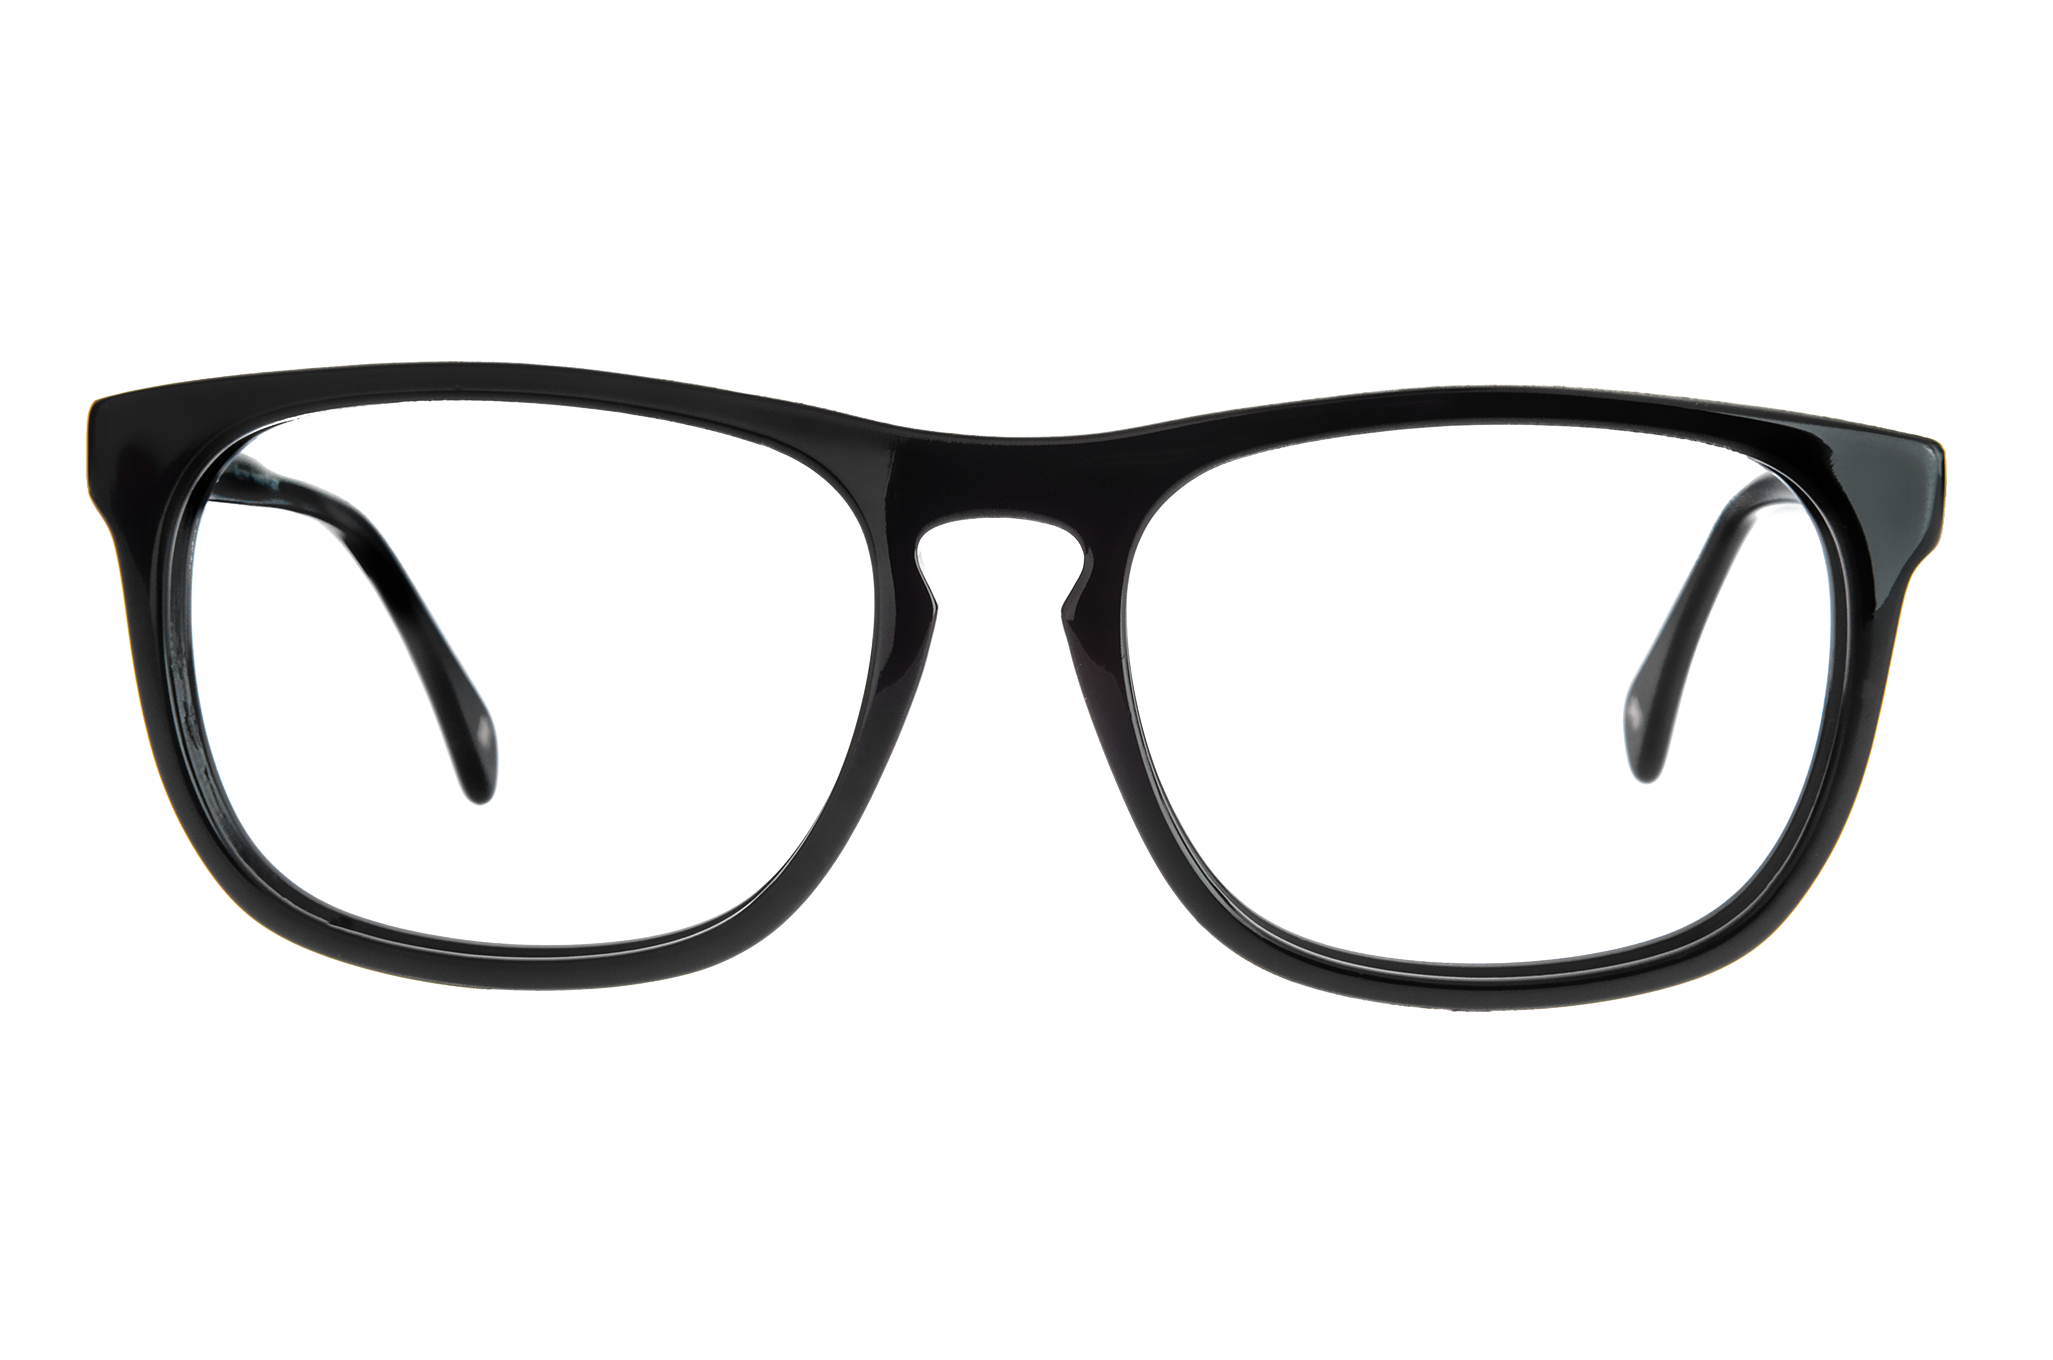 glasses PNG image transparent image download, size 2053x1360px